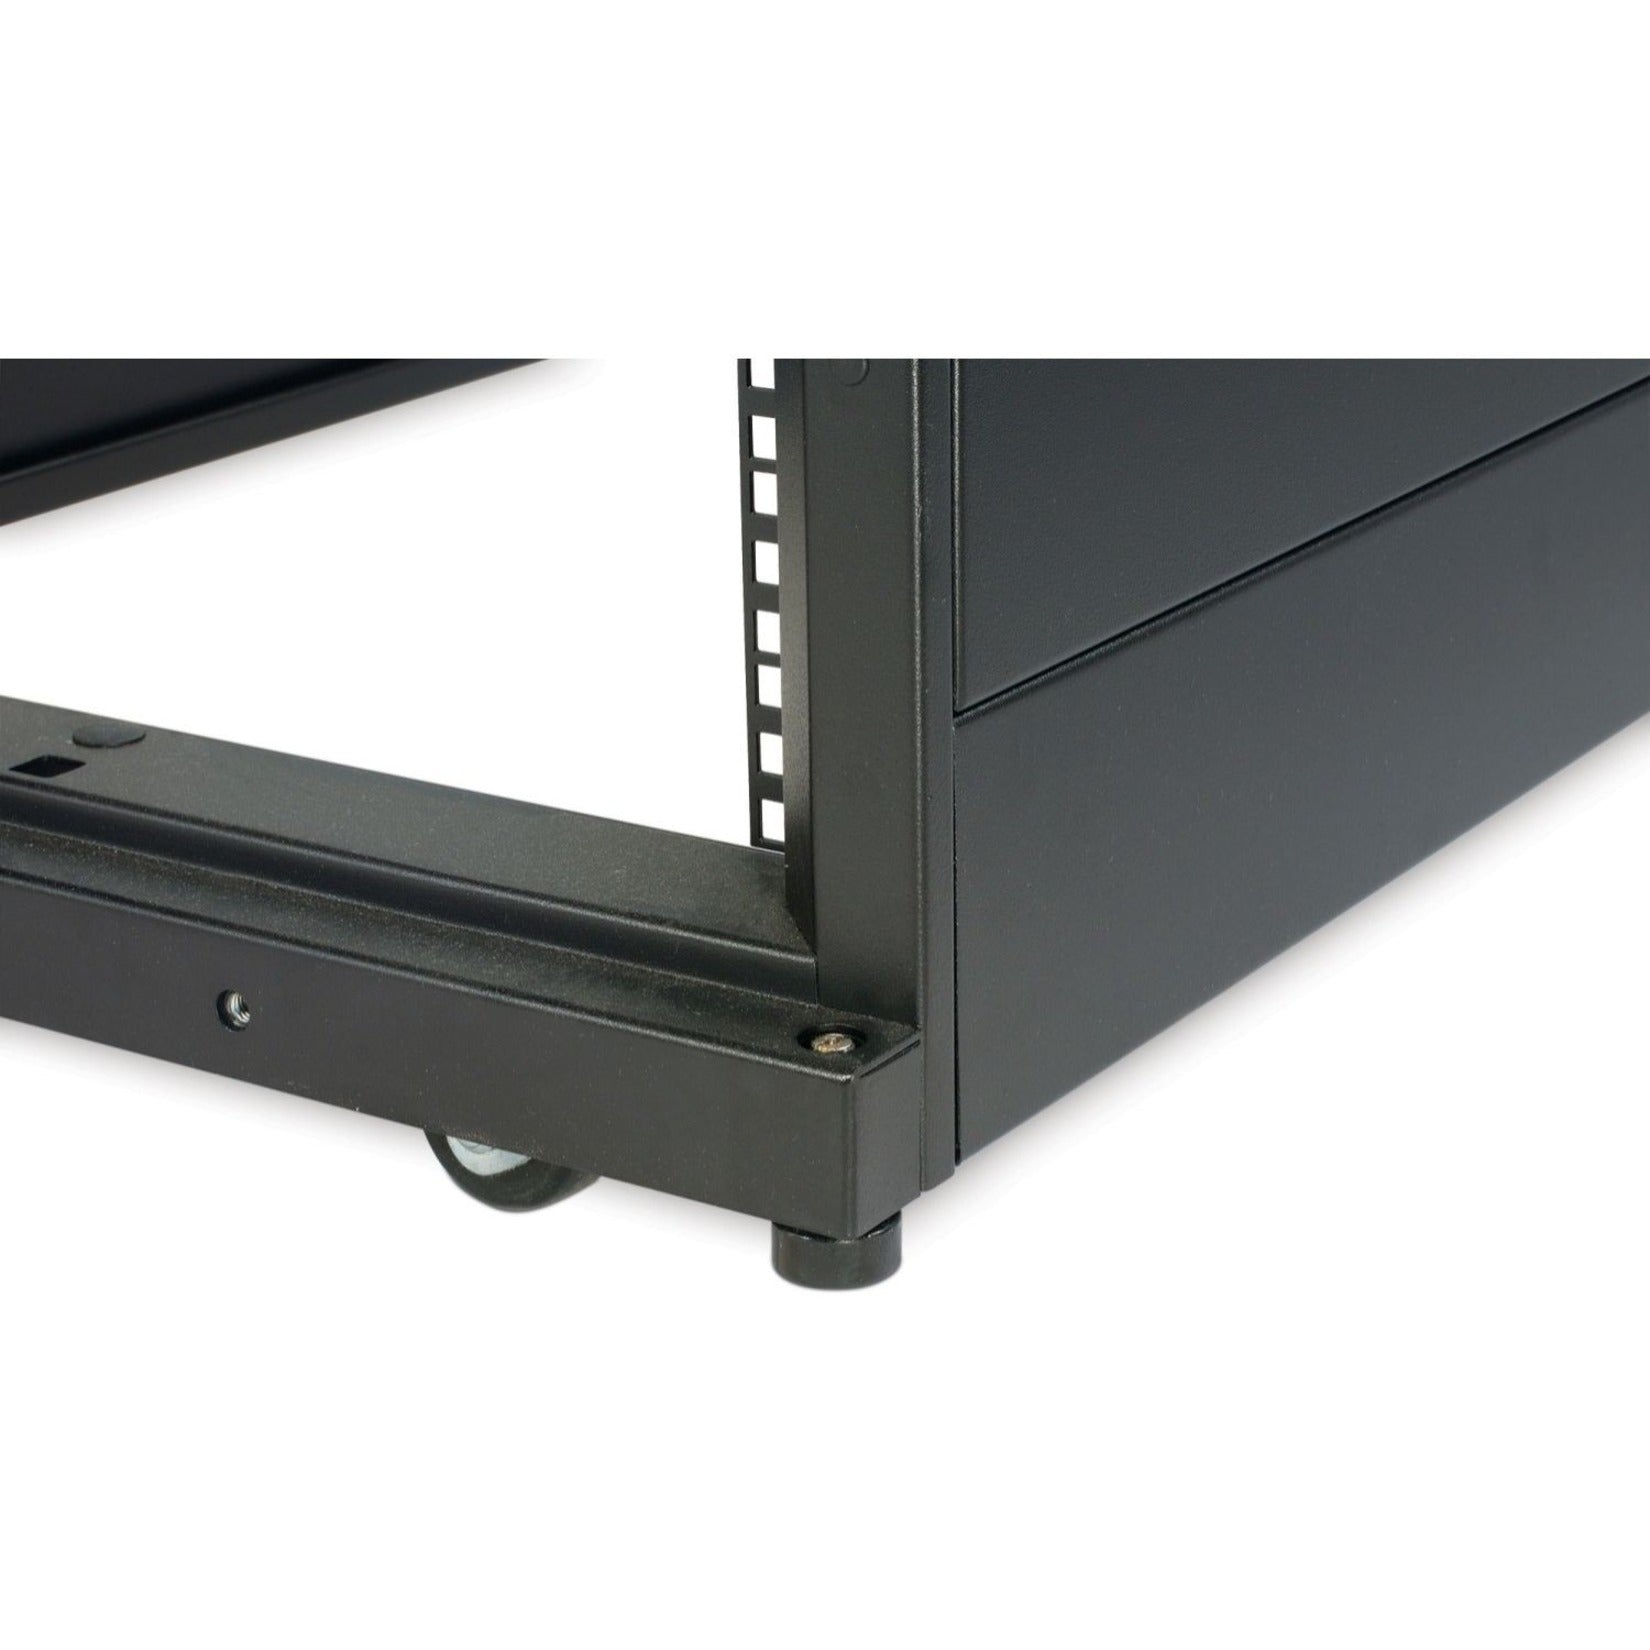 APC AR3300 NetShelter SX 42U Rack Cabinet, 600mm Wide x 1200mm Deep, Black, 5 Year Warranty